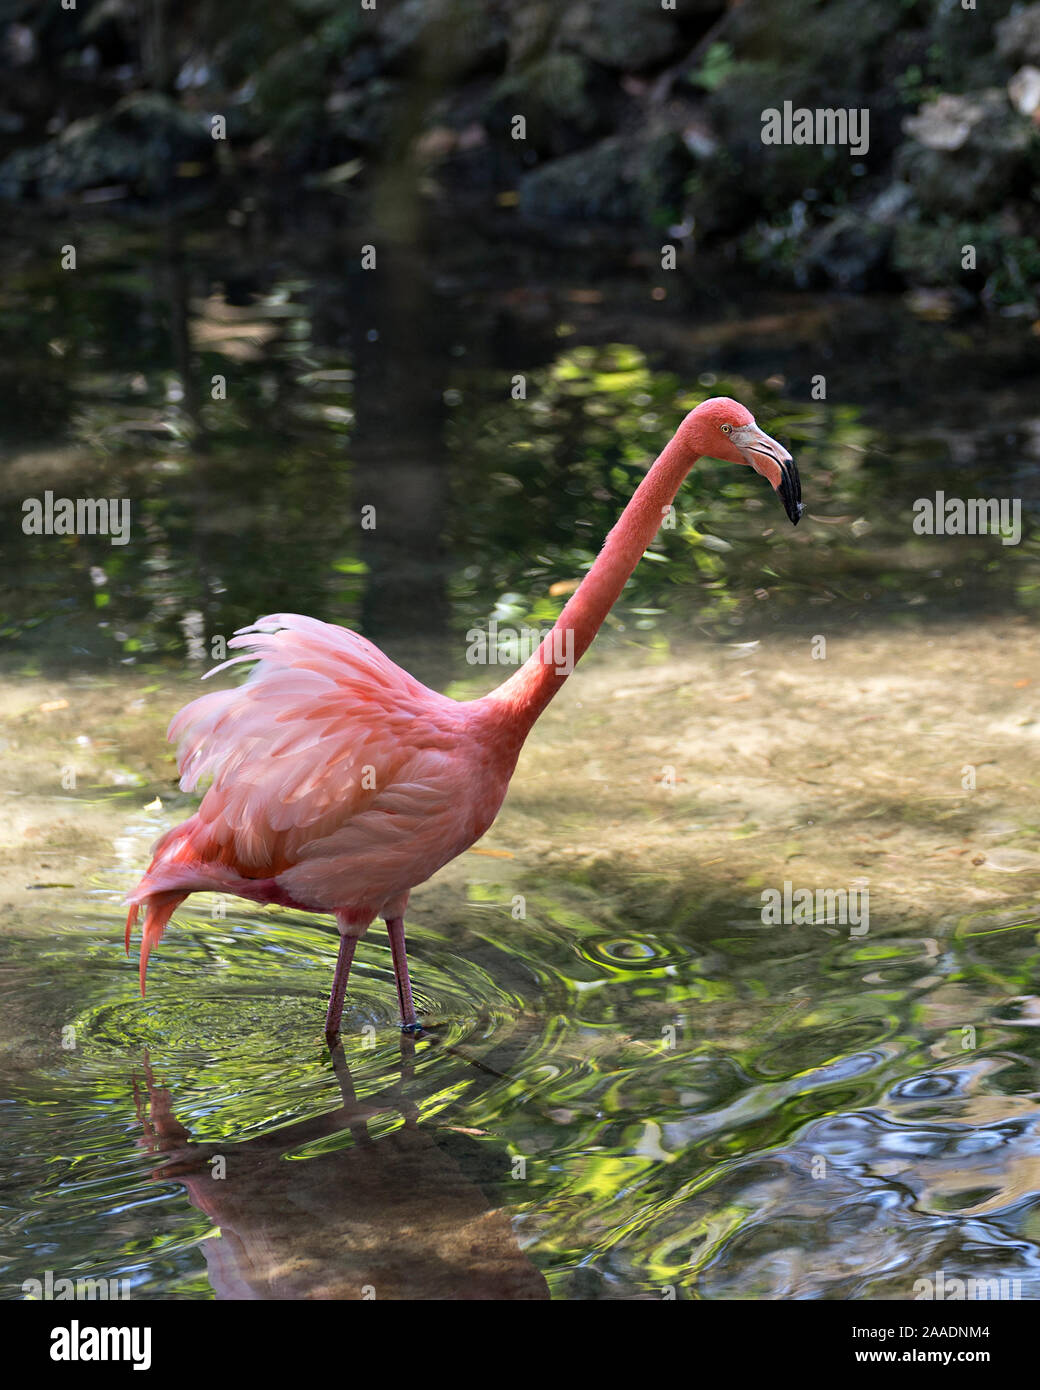 RXD Micro Short Tights - Flamingo